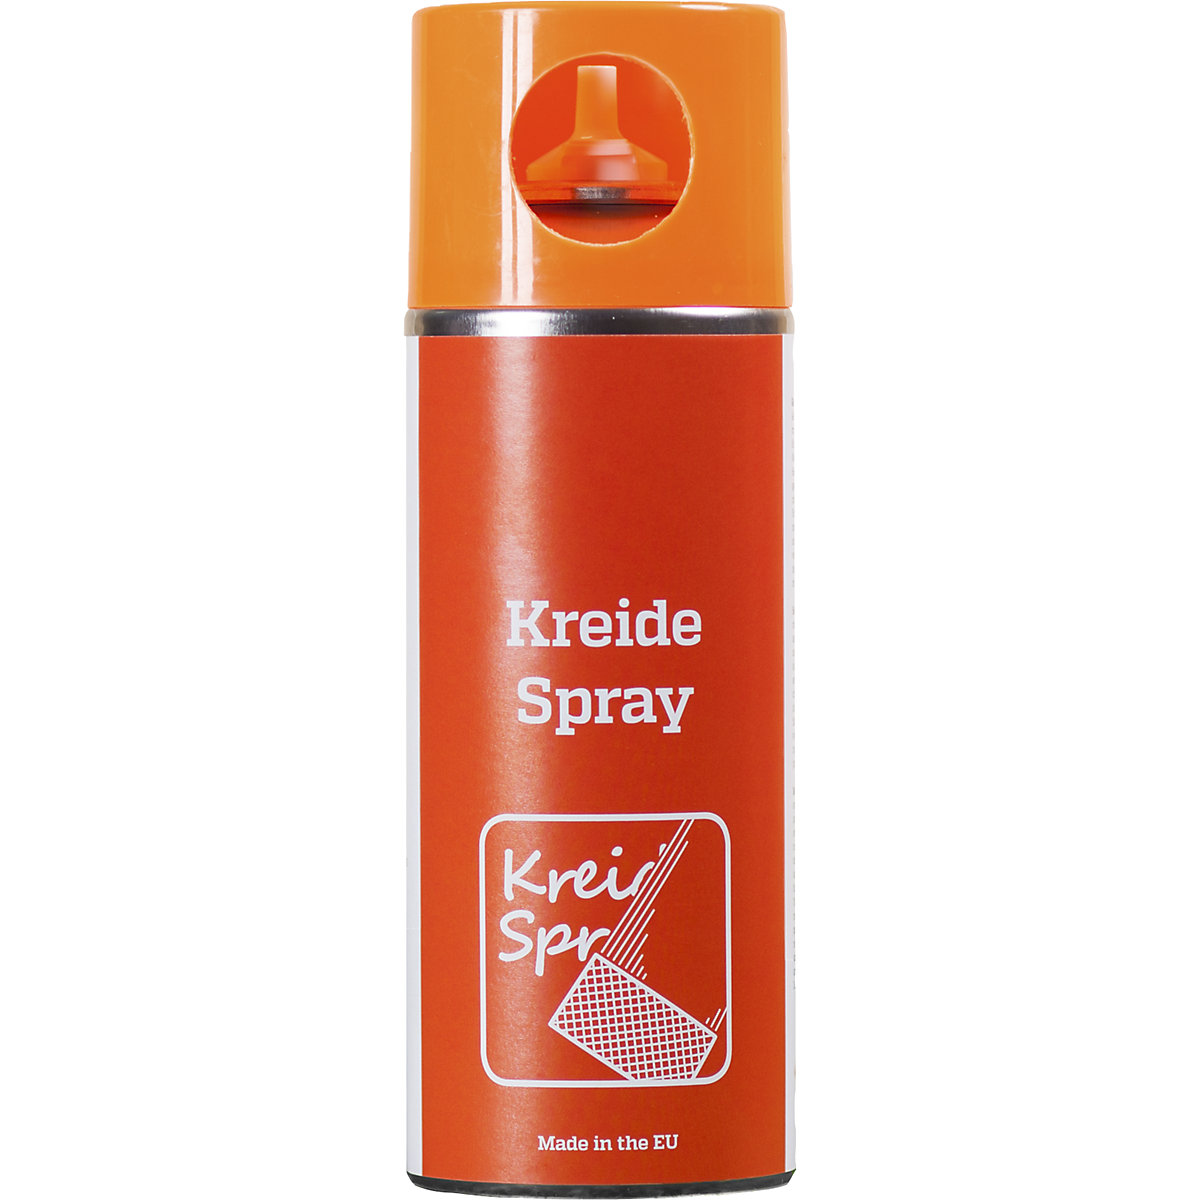 Kreidespray, Inhalt 400 ml, VE 6 Stk, orange, ab 5 VE